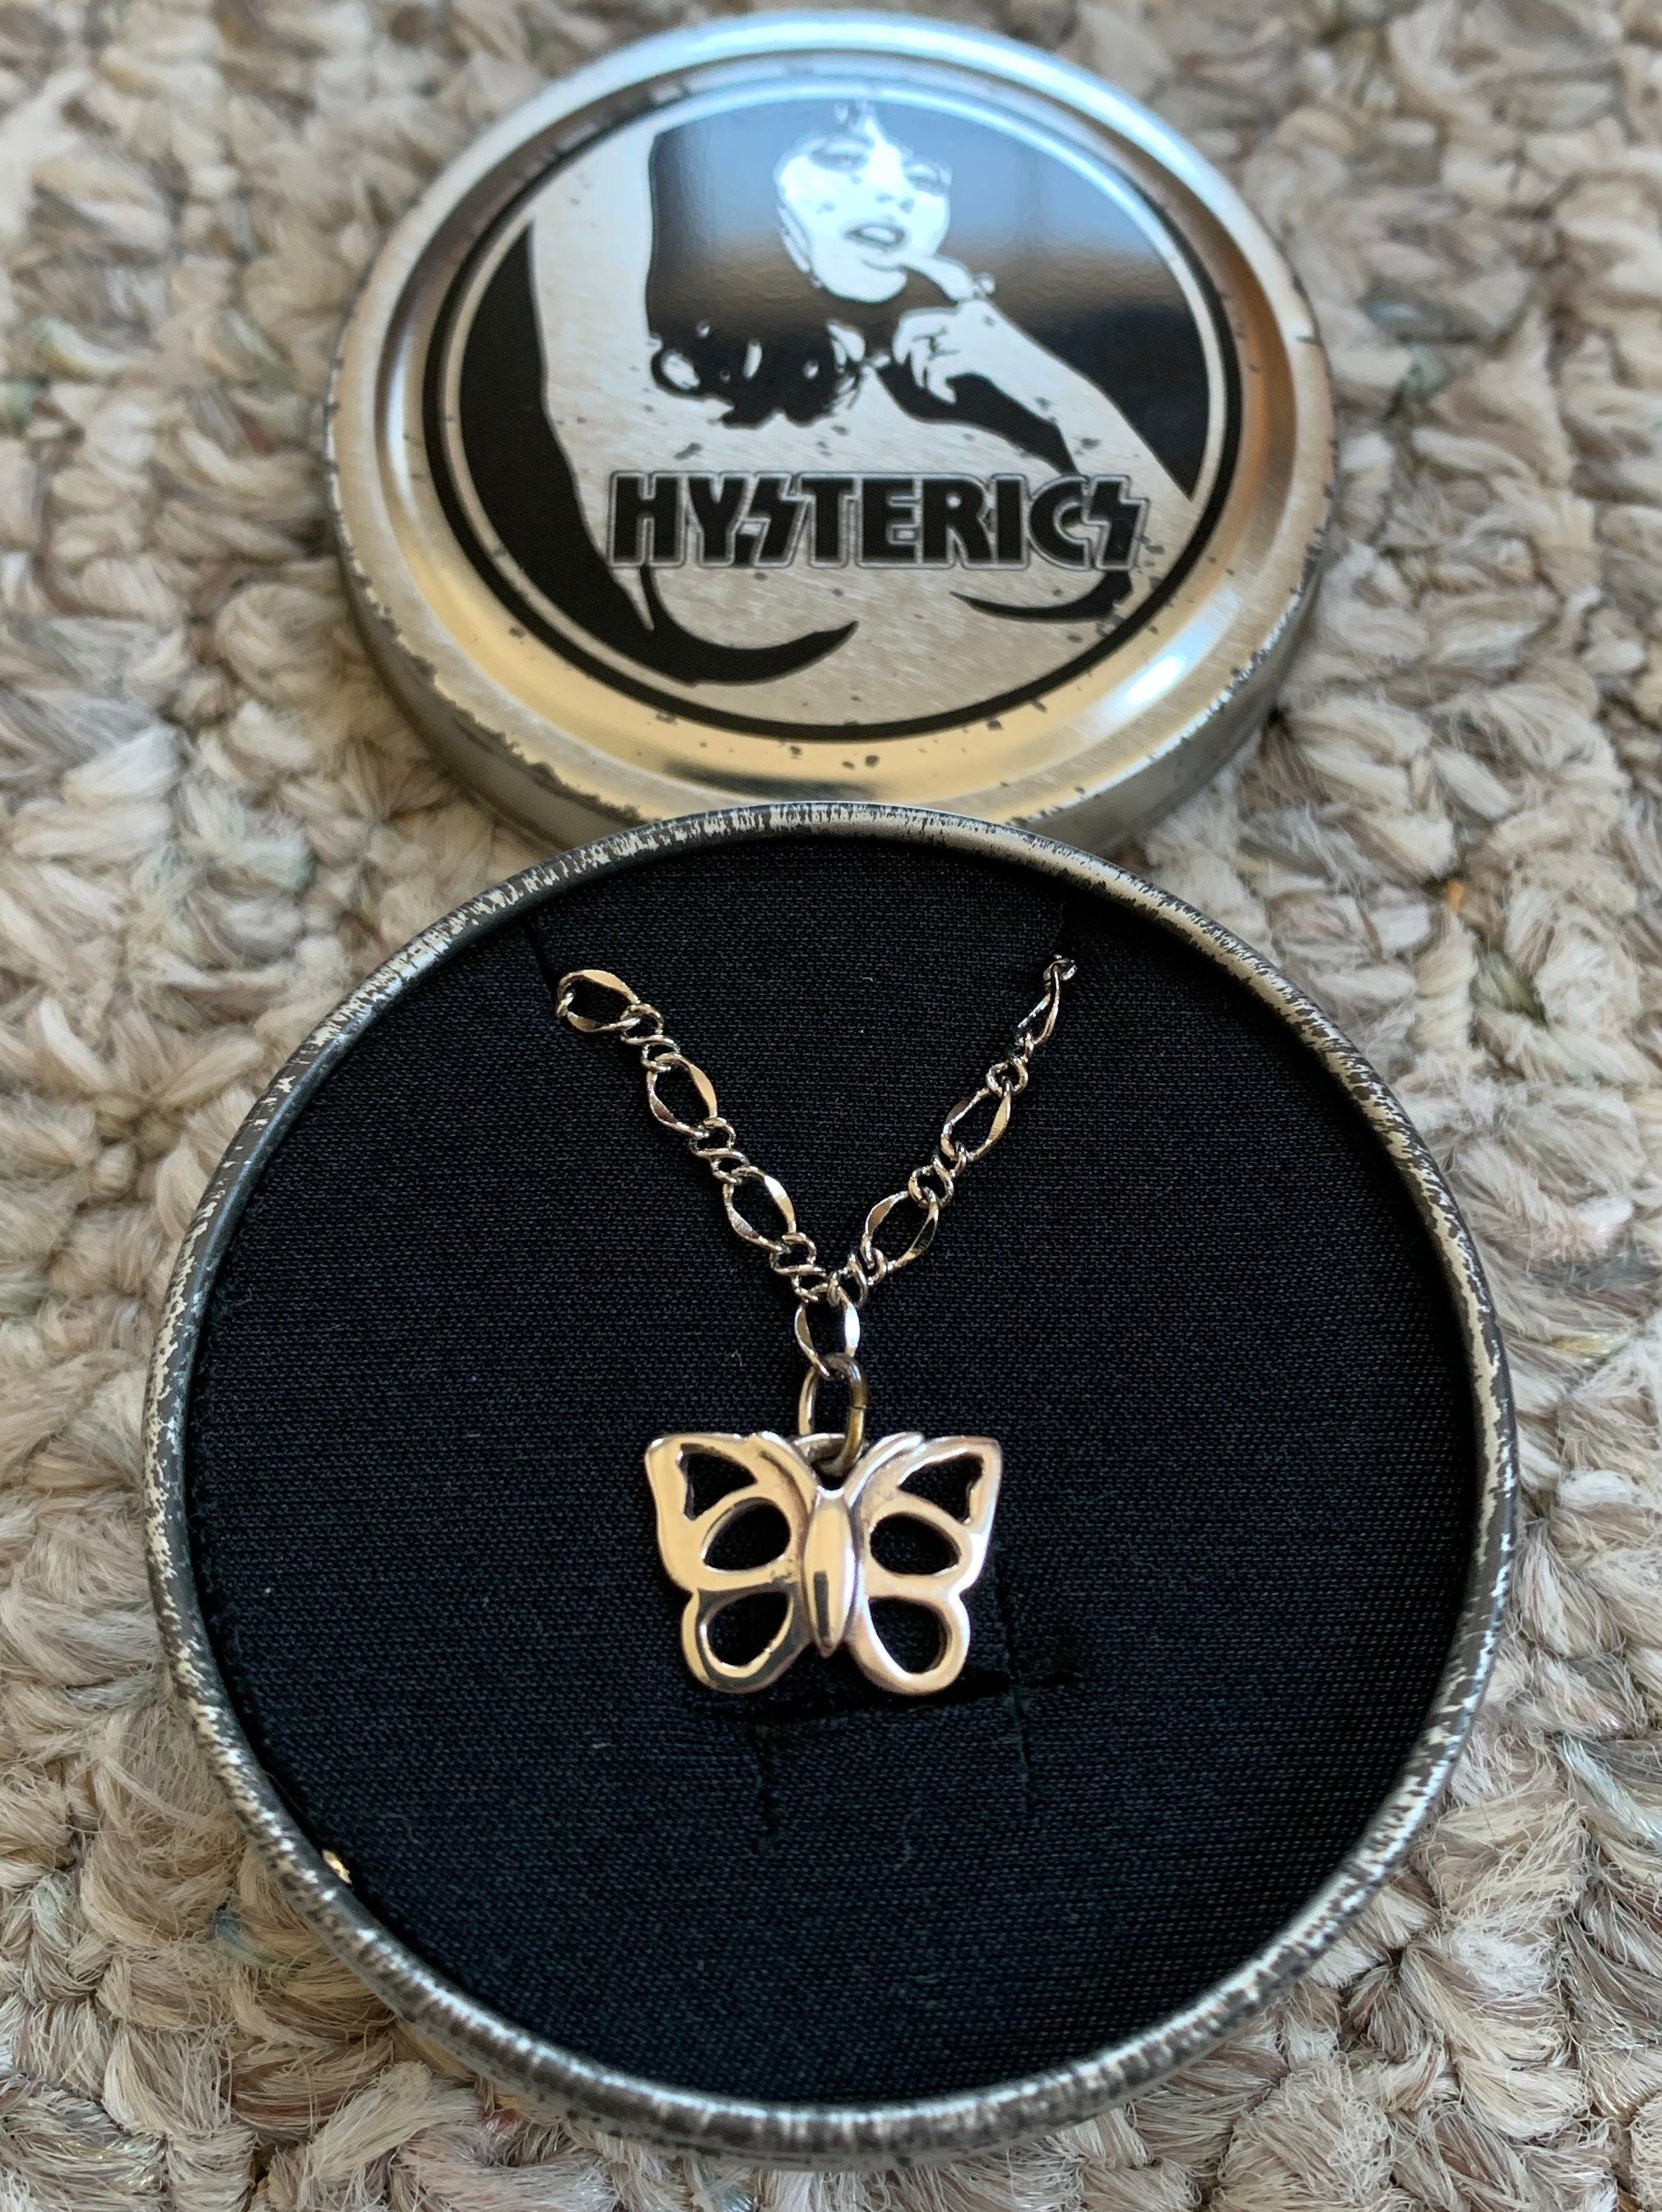 Hysteric Glamour Sterling Silver Butterfly Bracelet + Case